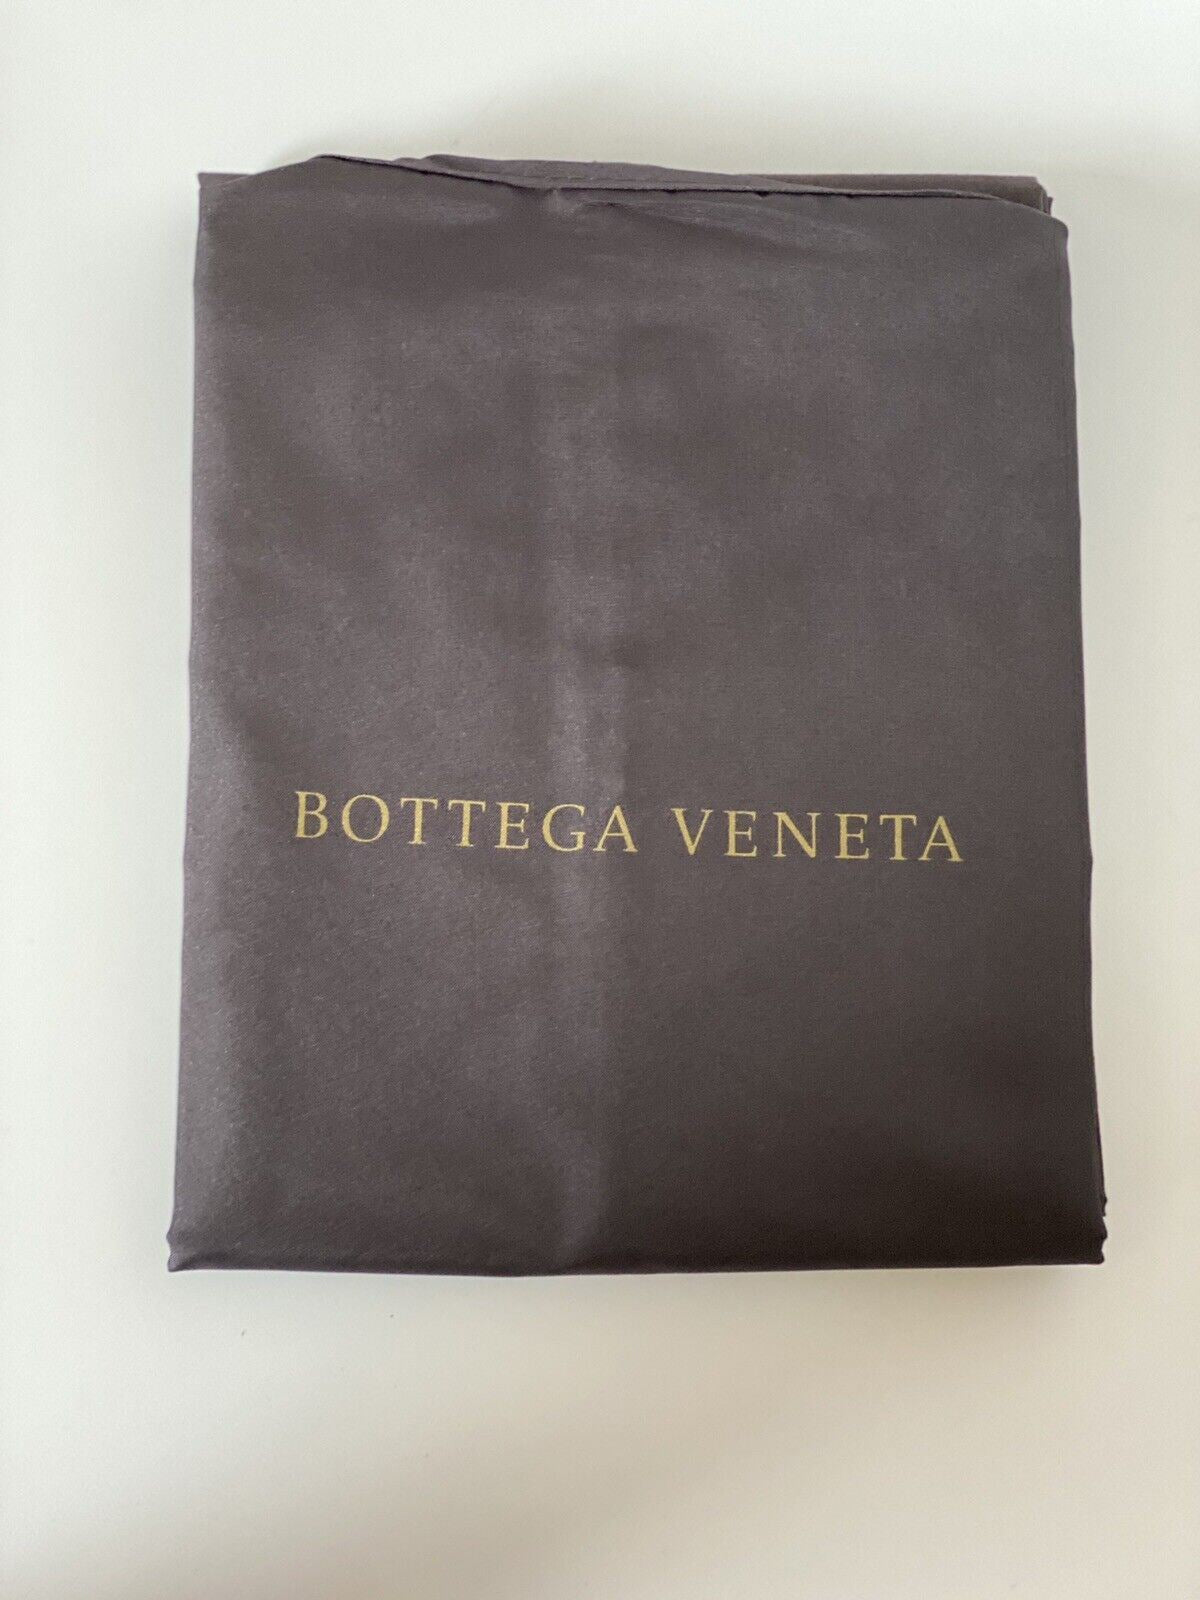 NWT $6900 Bottega Veneta Mens Cashmere Black Coat 38 US (48 Euro) 603547 Italy